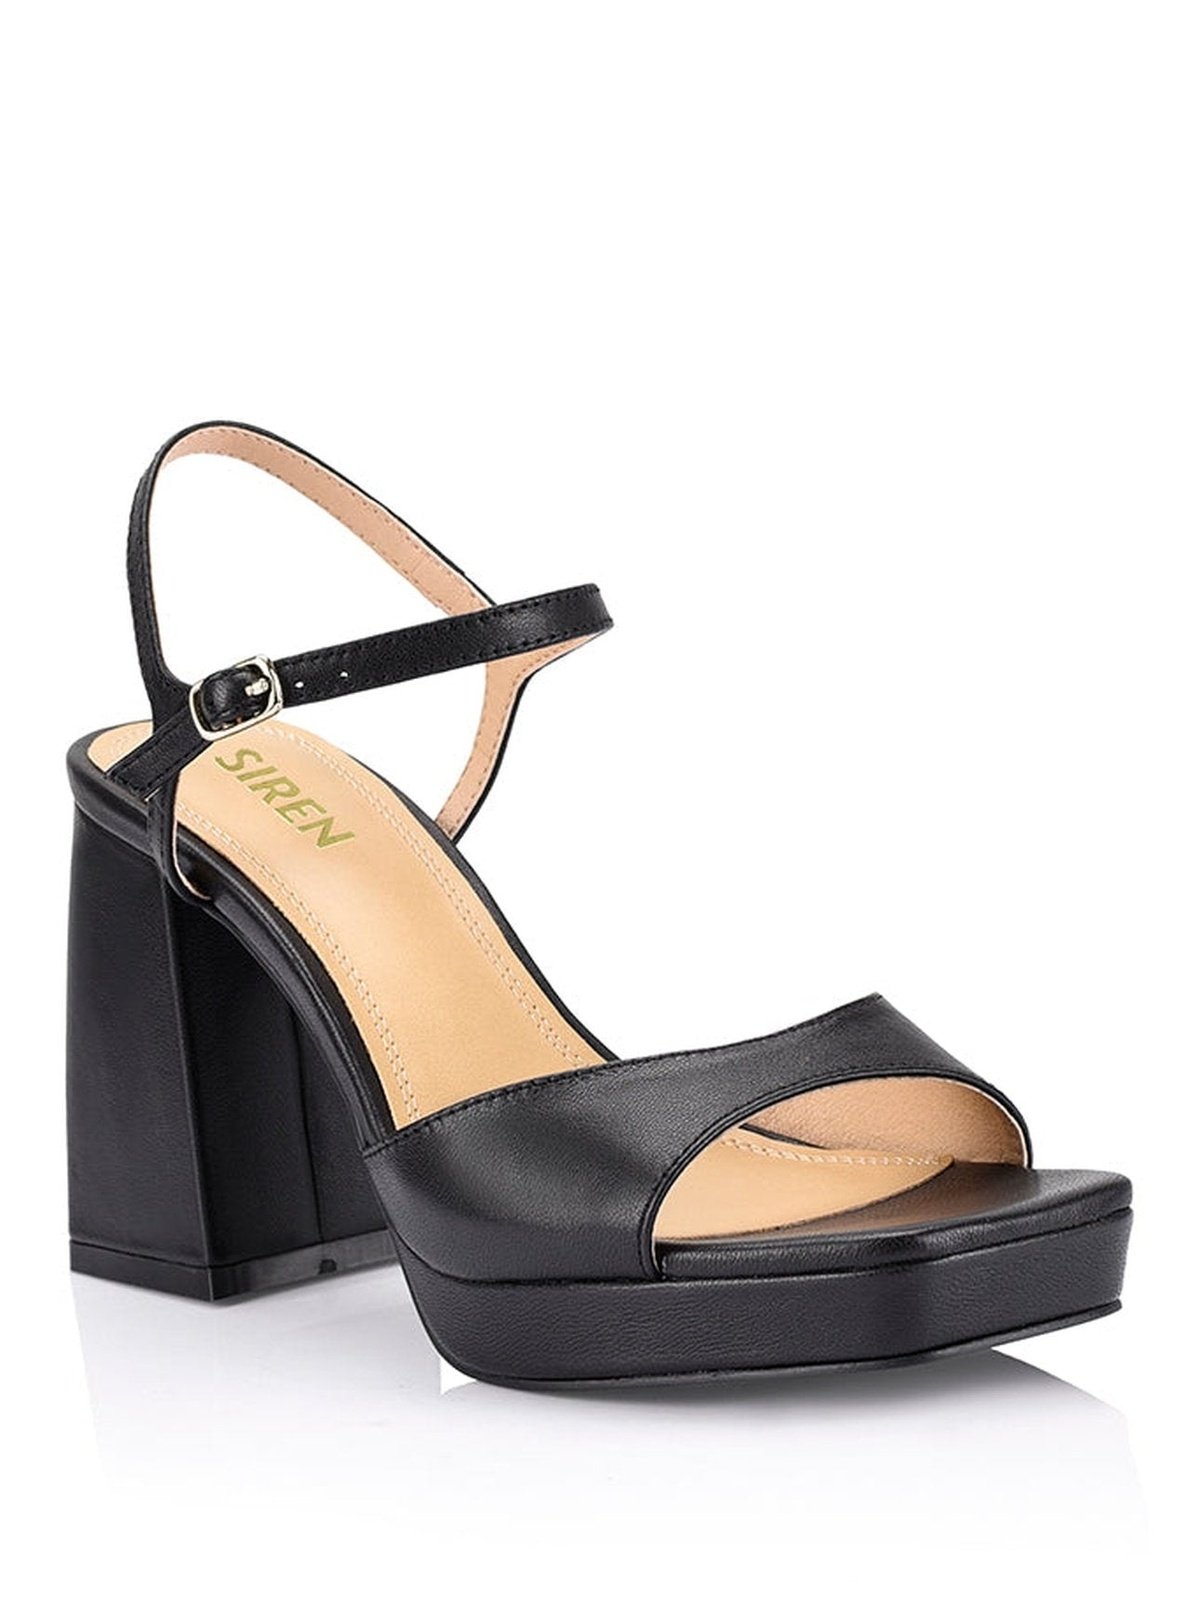 Martinez Platform Heels - Black Leather